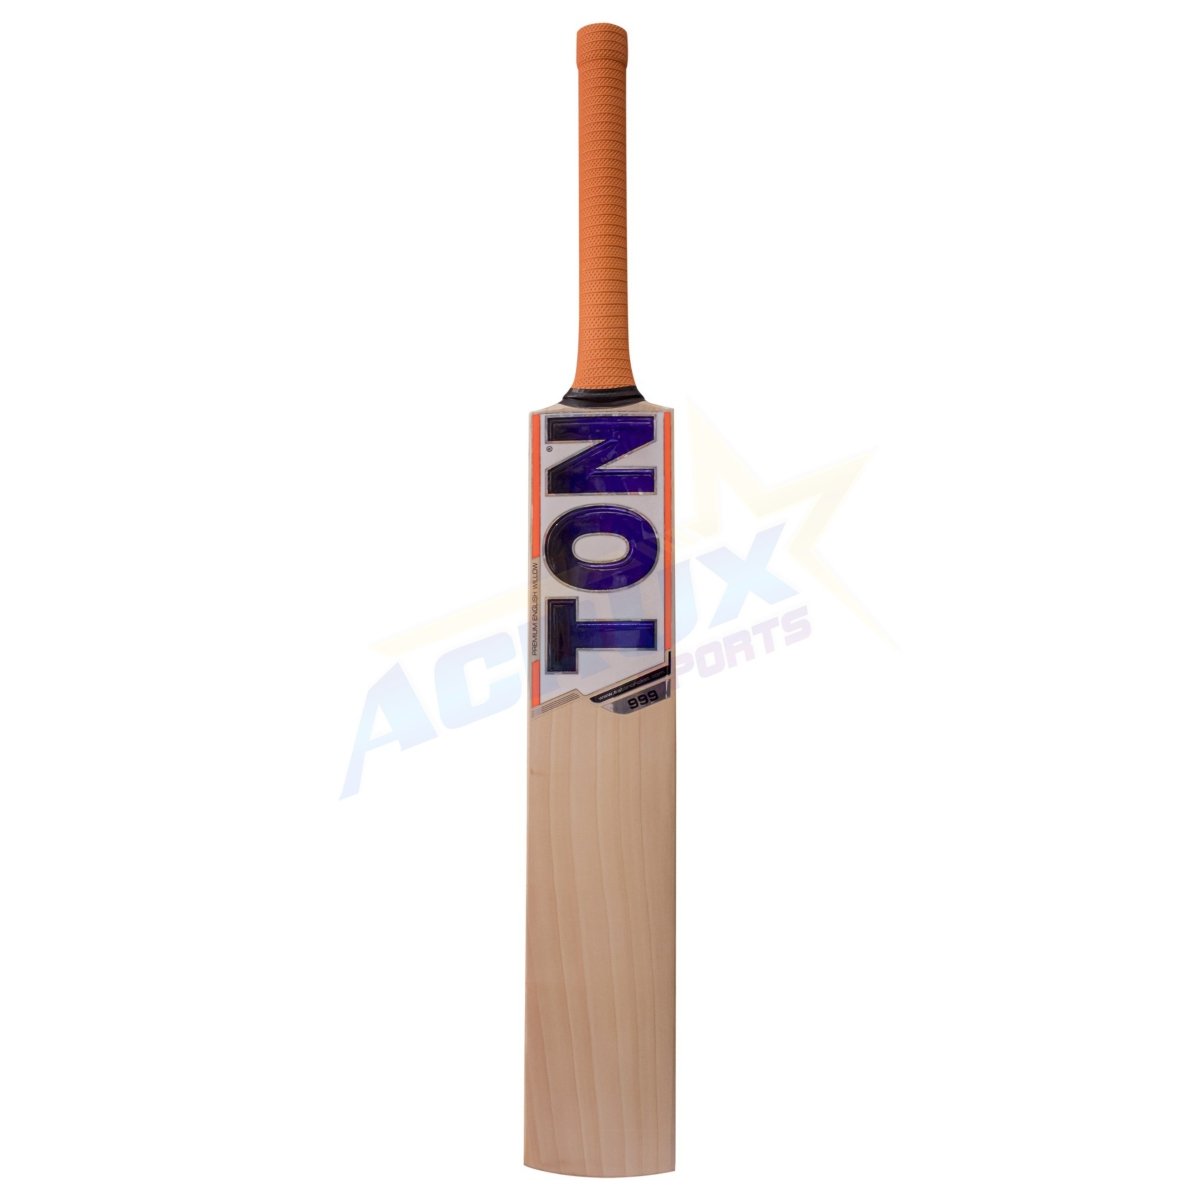 TON 999 English Willow Cricket Bat